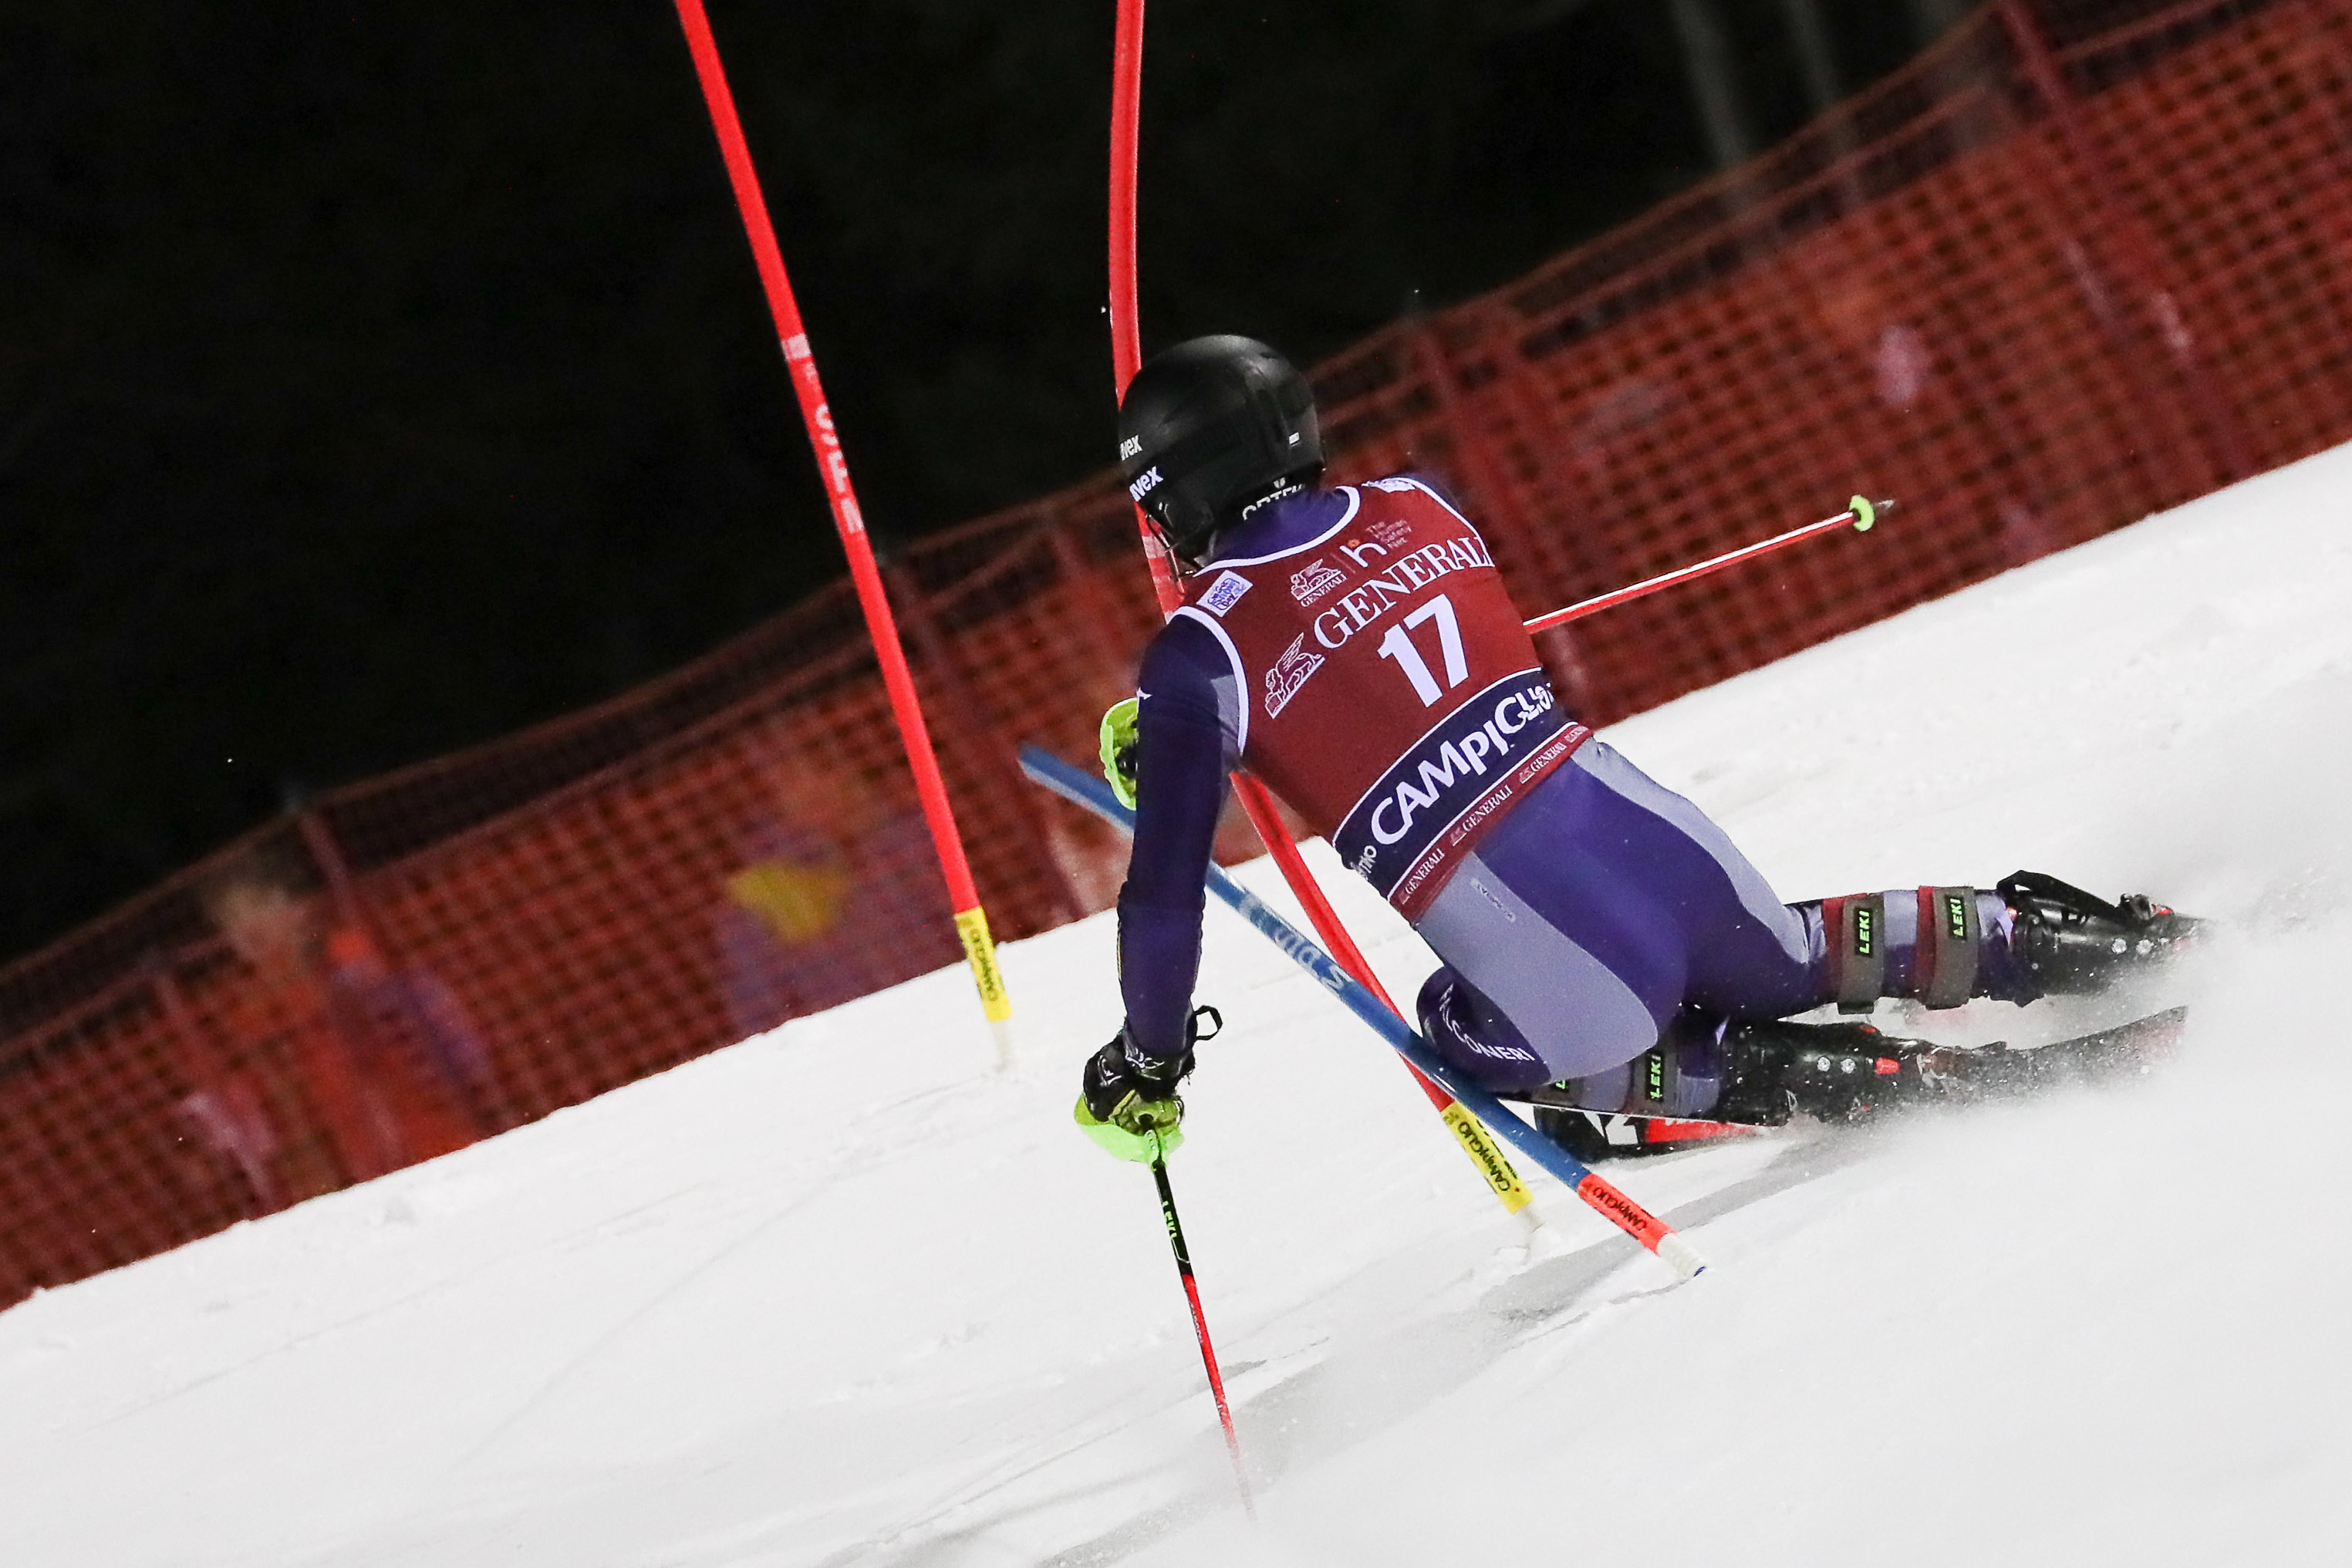 SKIING - FIS SKI WORLD CUP, SL Men.
Madonna di Campiglio, Veneto, Italy
2020-01-08 - Wednesday
Credits: PhotoBisi